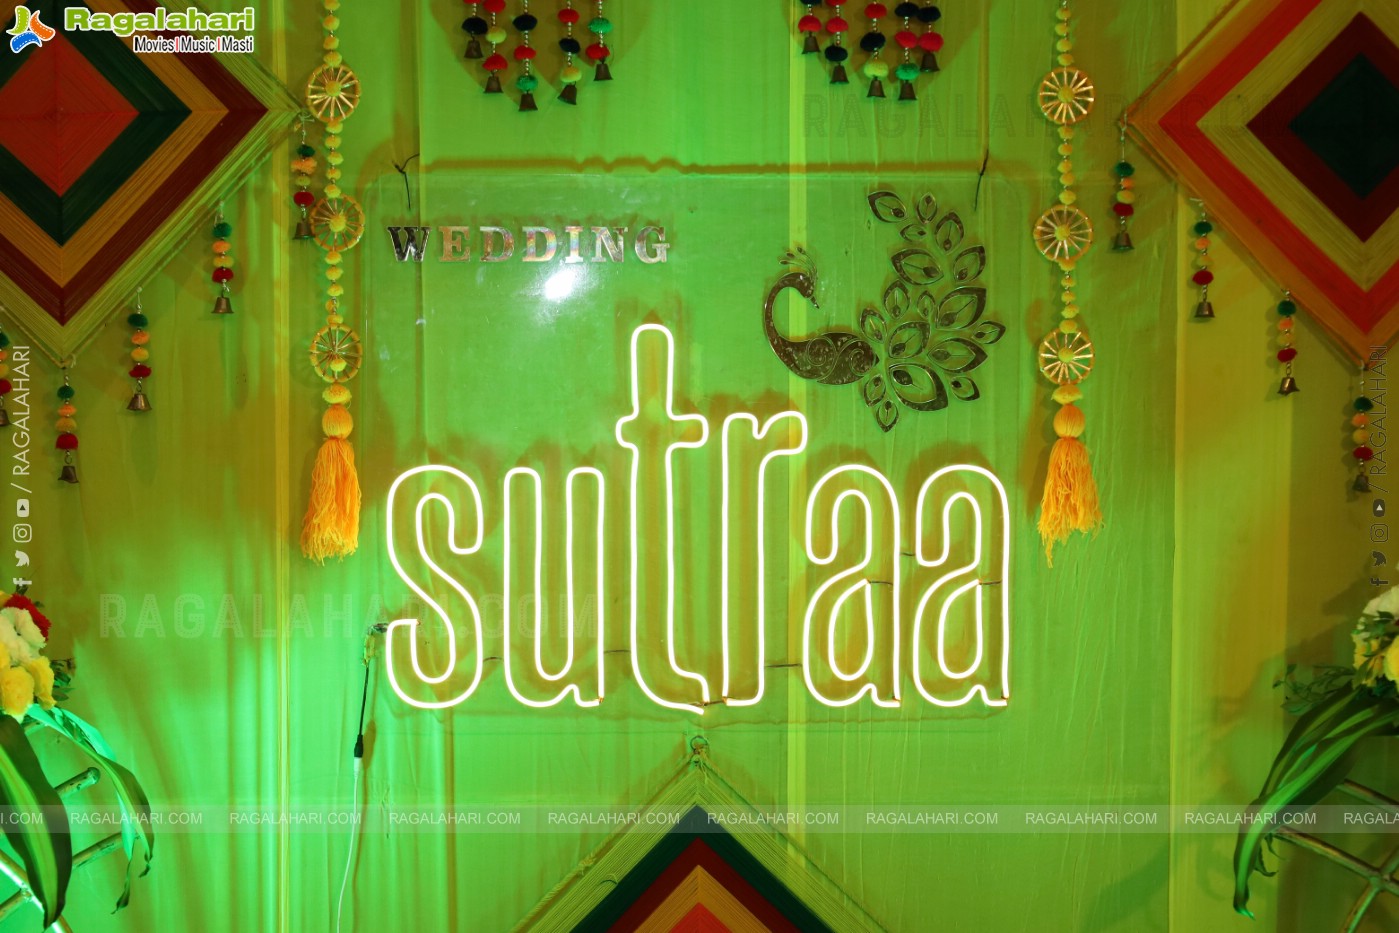 Sutraa Fashion Exhibition, Inaugurated by Kamakshi Bhaskarla at Taj Krishna